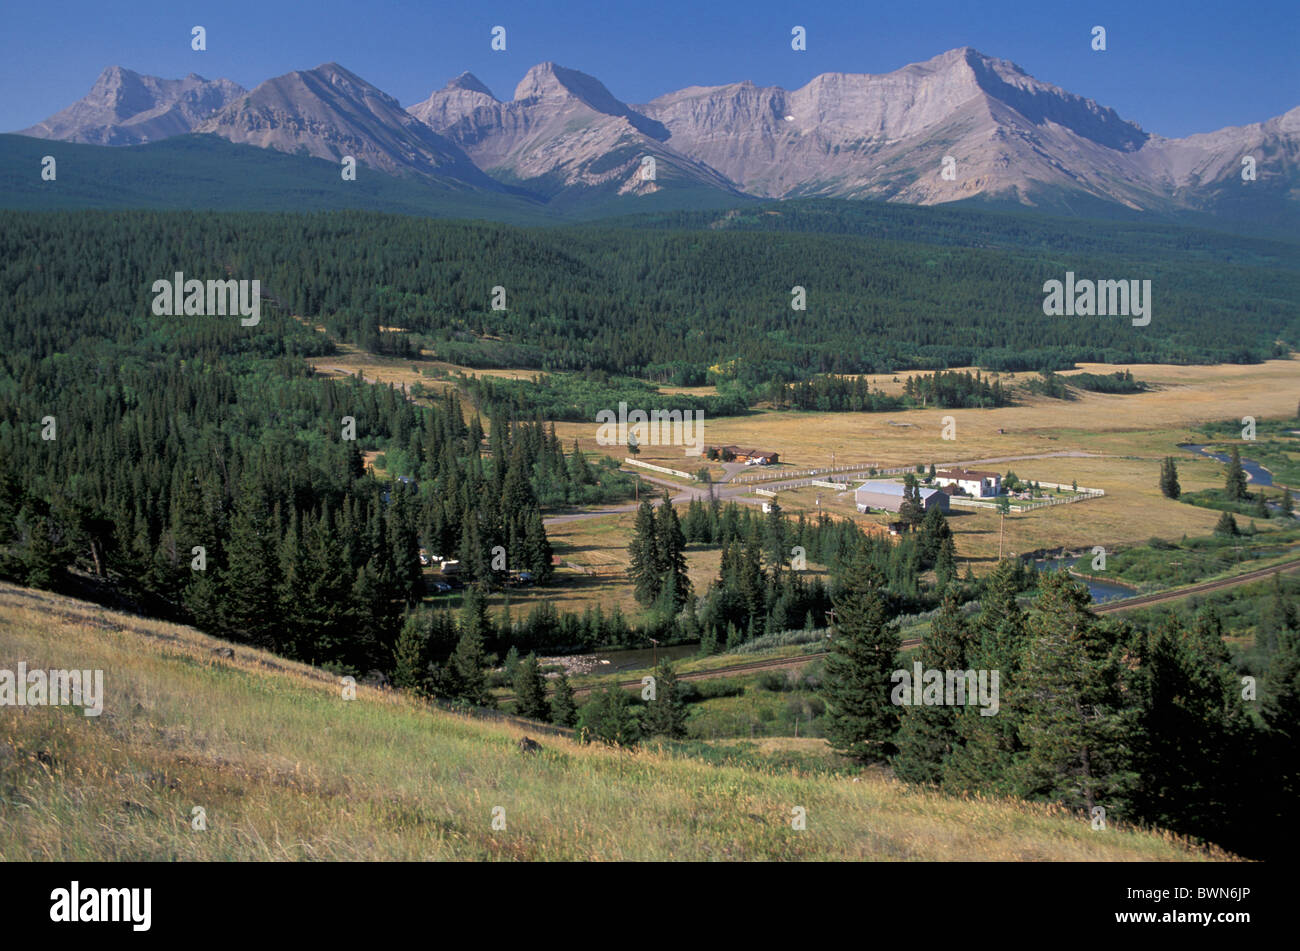 Canada North America America Rocky Mountain front near Crowsnest pass Alberta landscape mountains mountain con Stock Photo